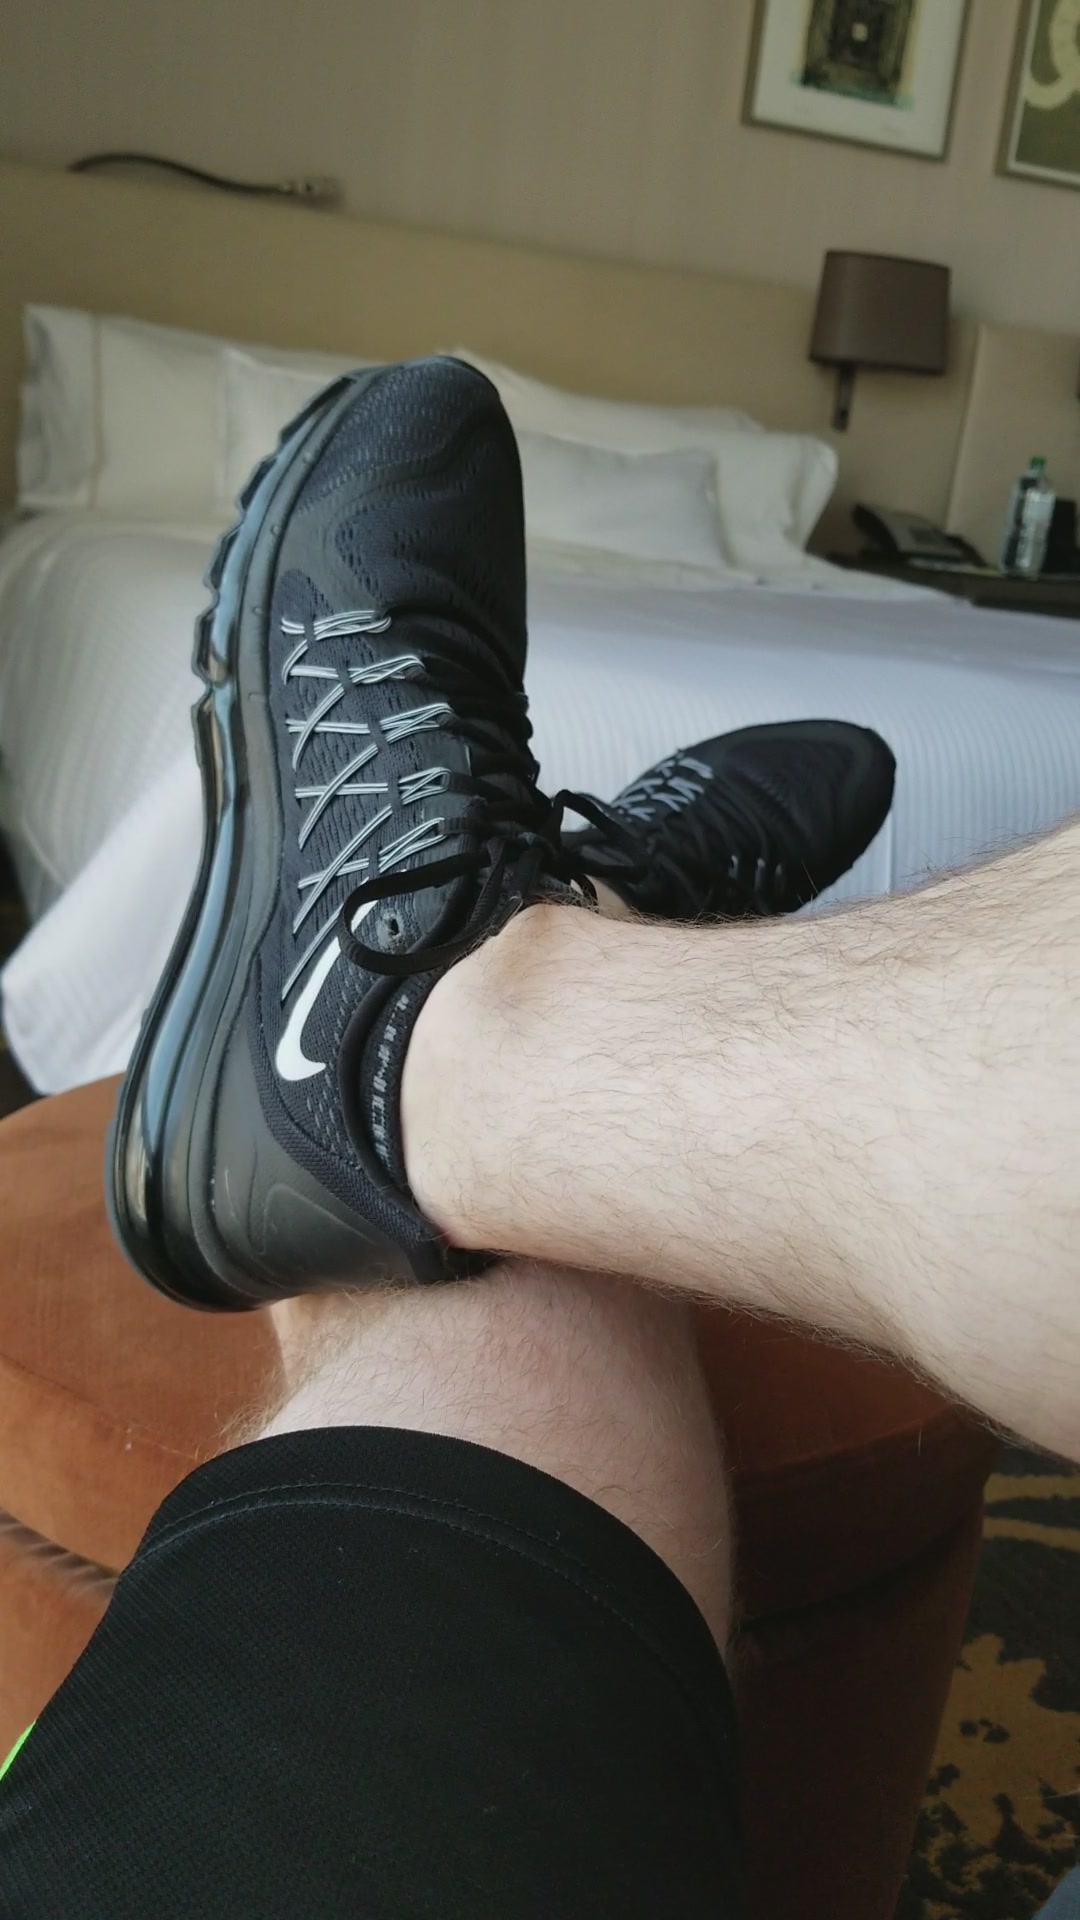 Nikes on Feet